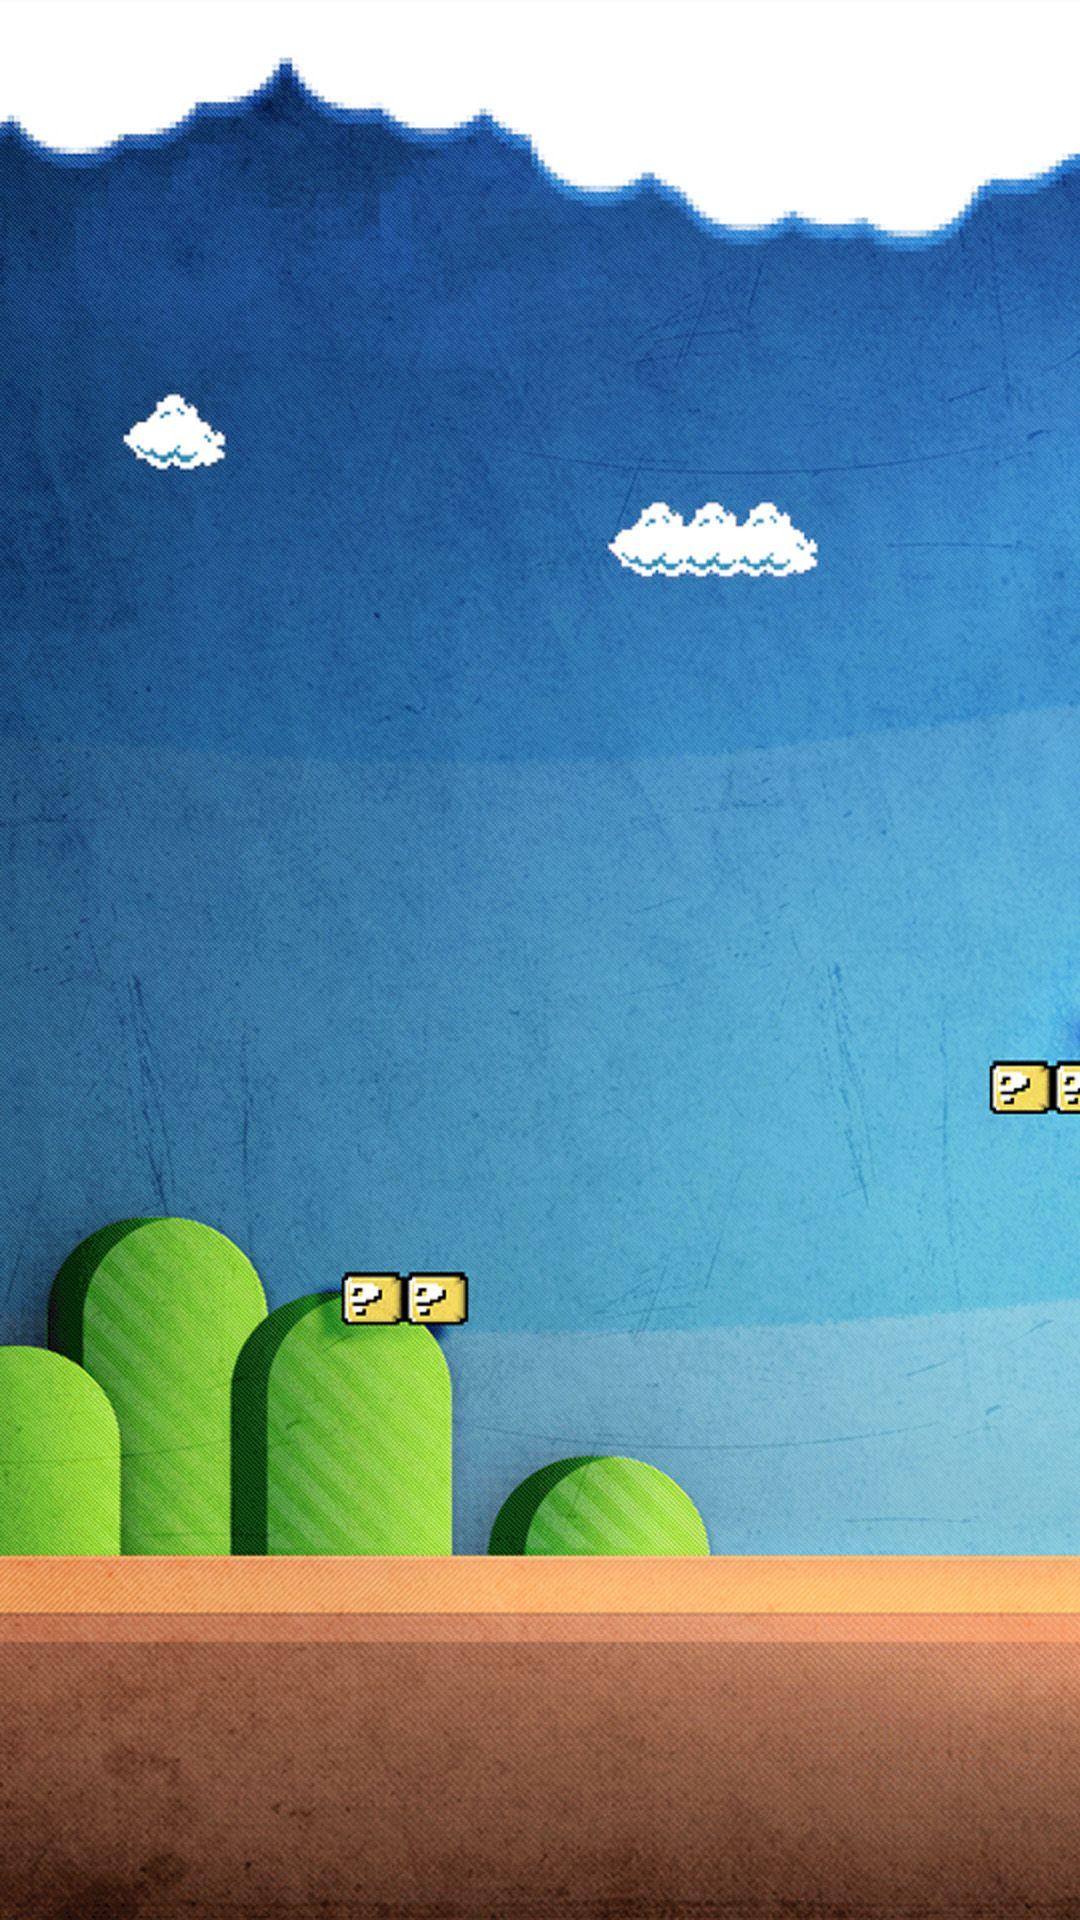 Super Mario wallpaper for iPhone